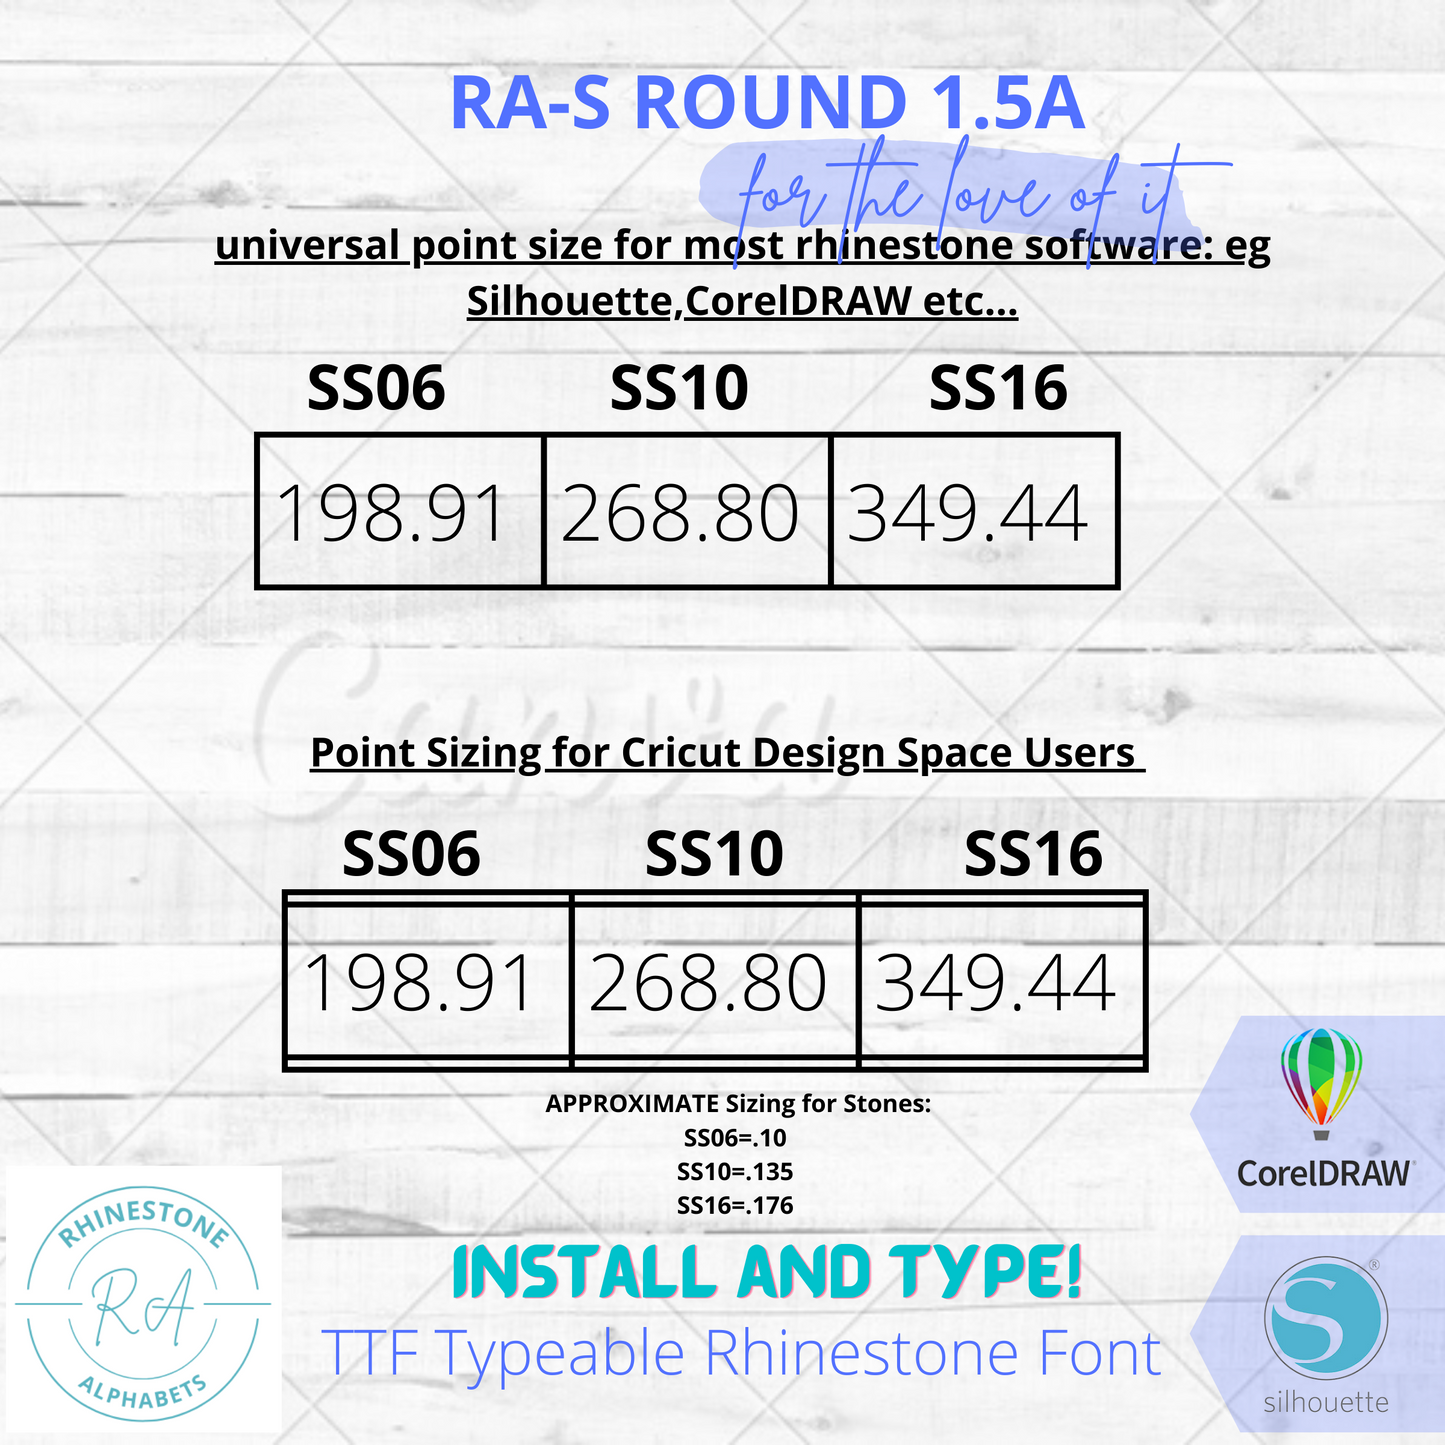 RA-S Round 1.5A